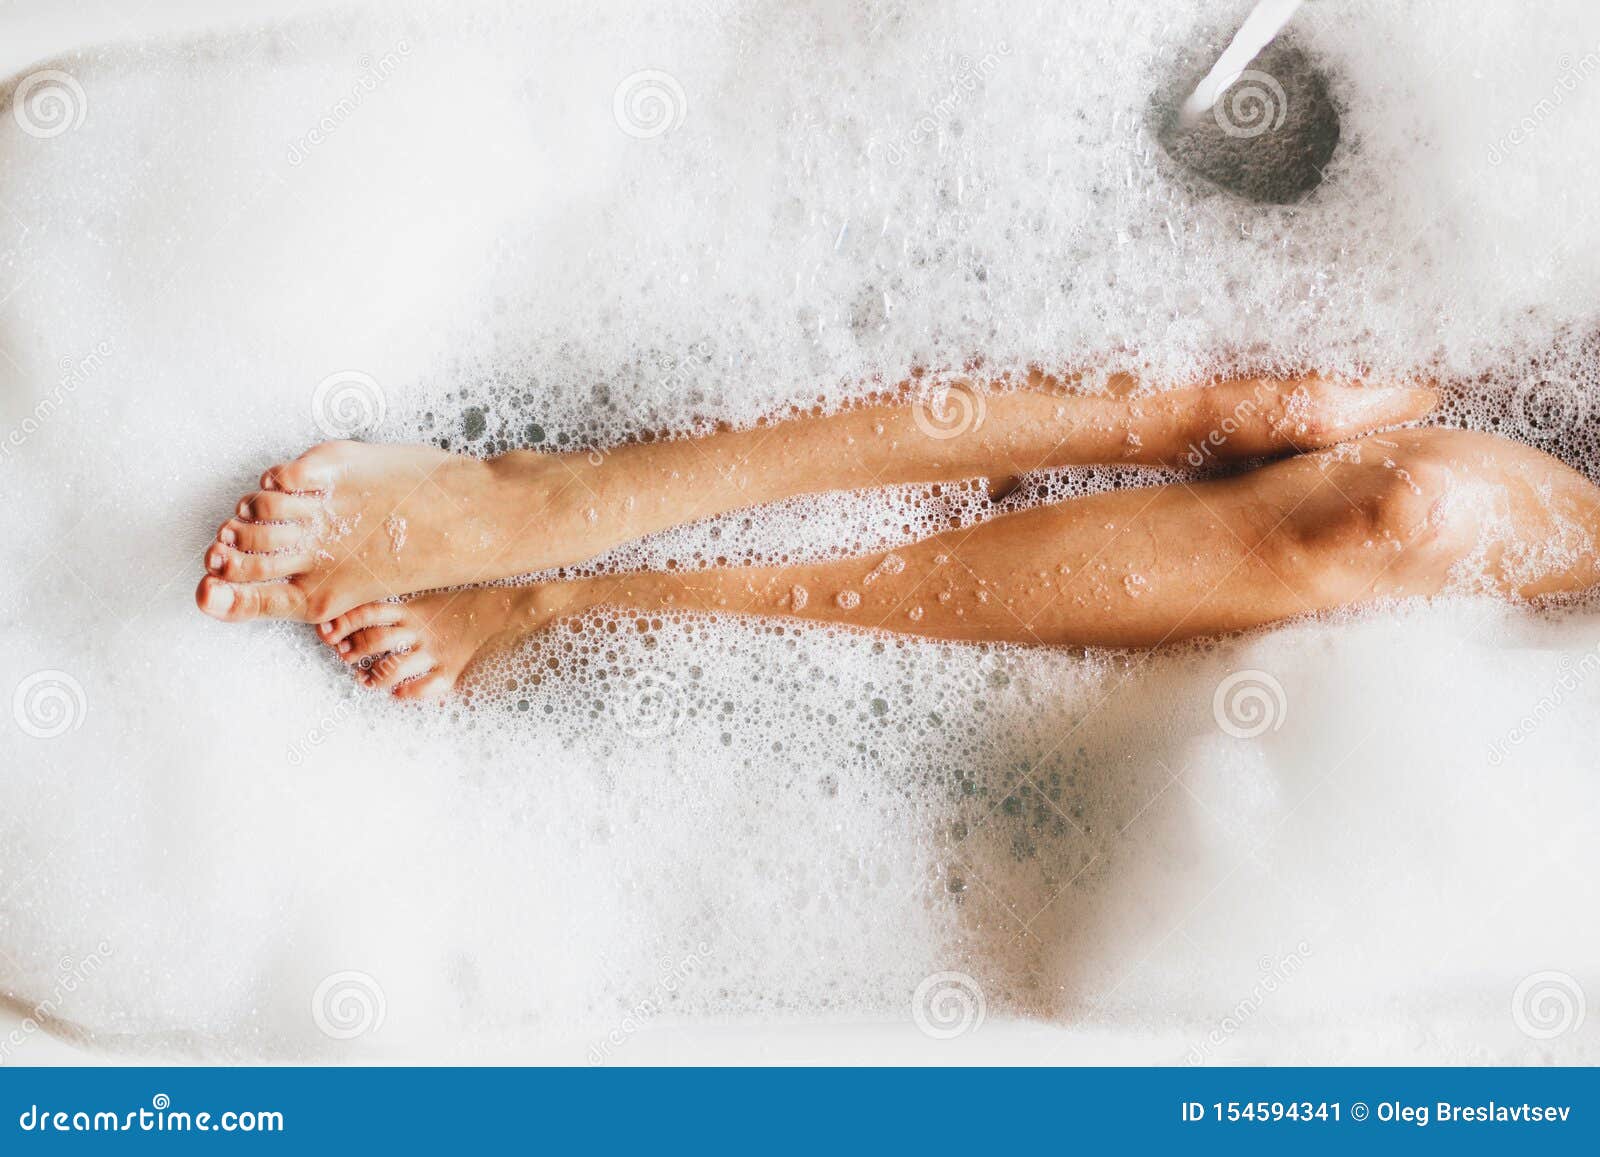 burke smith share legs in bubble bath photos